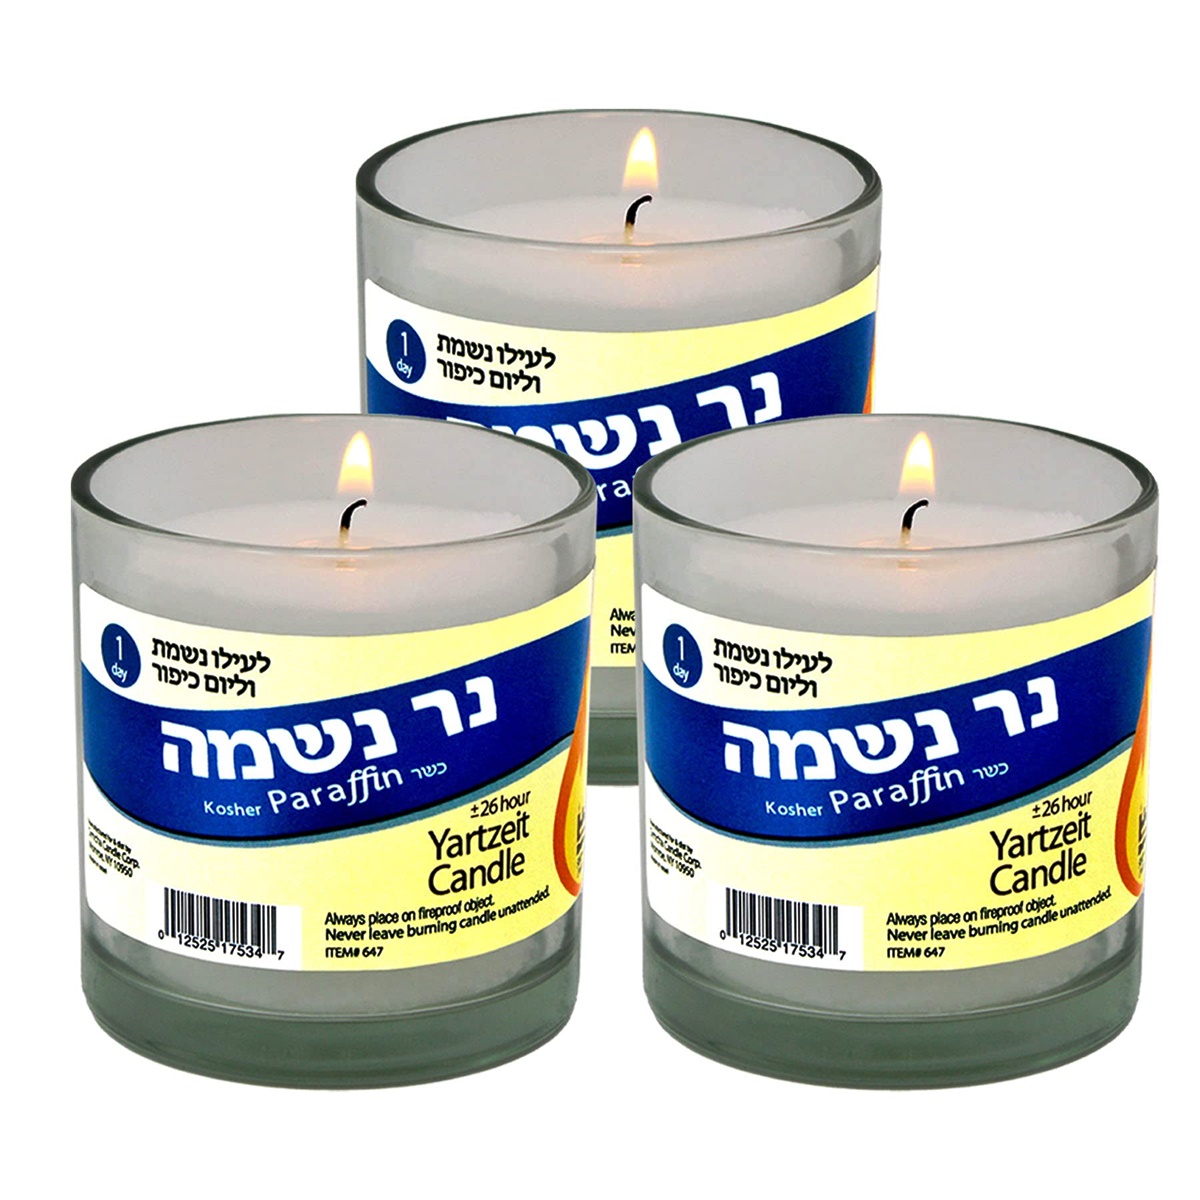 Where To Buy Yahrzeit Candle